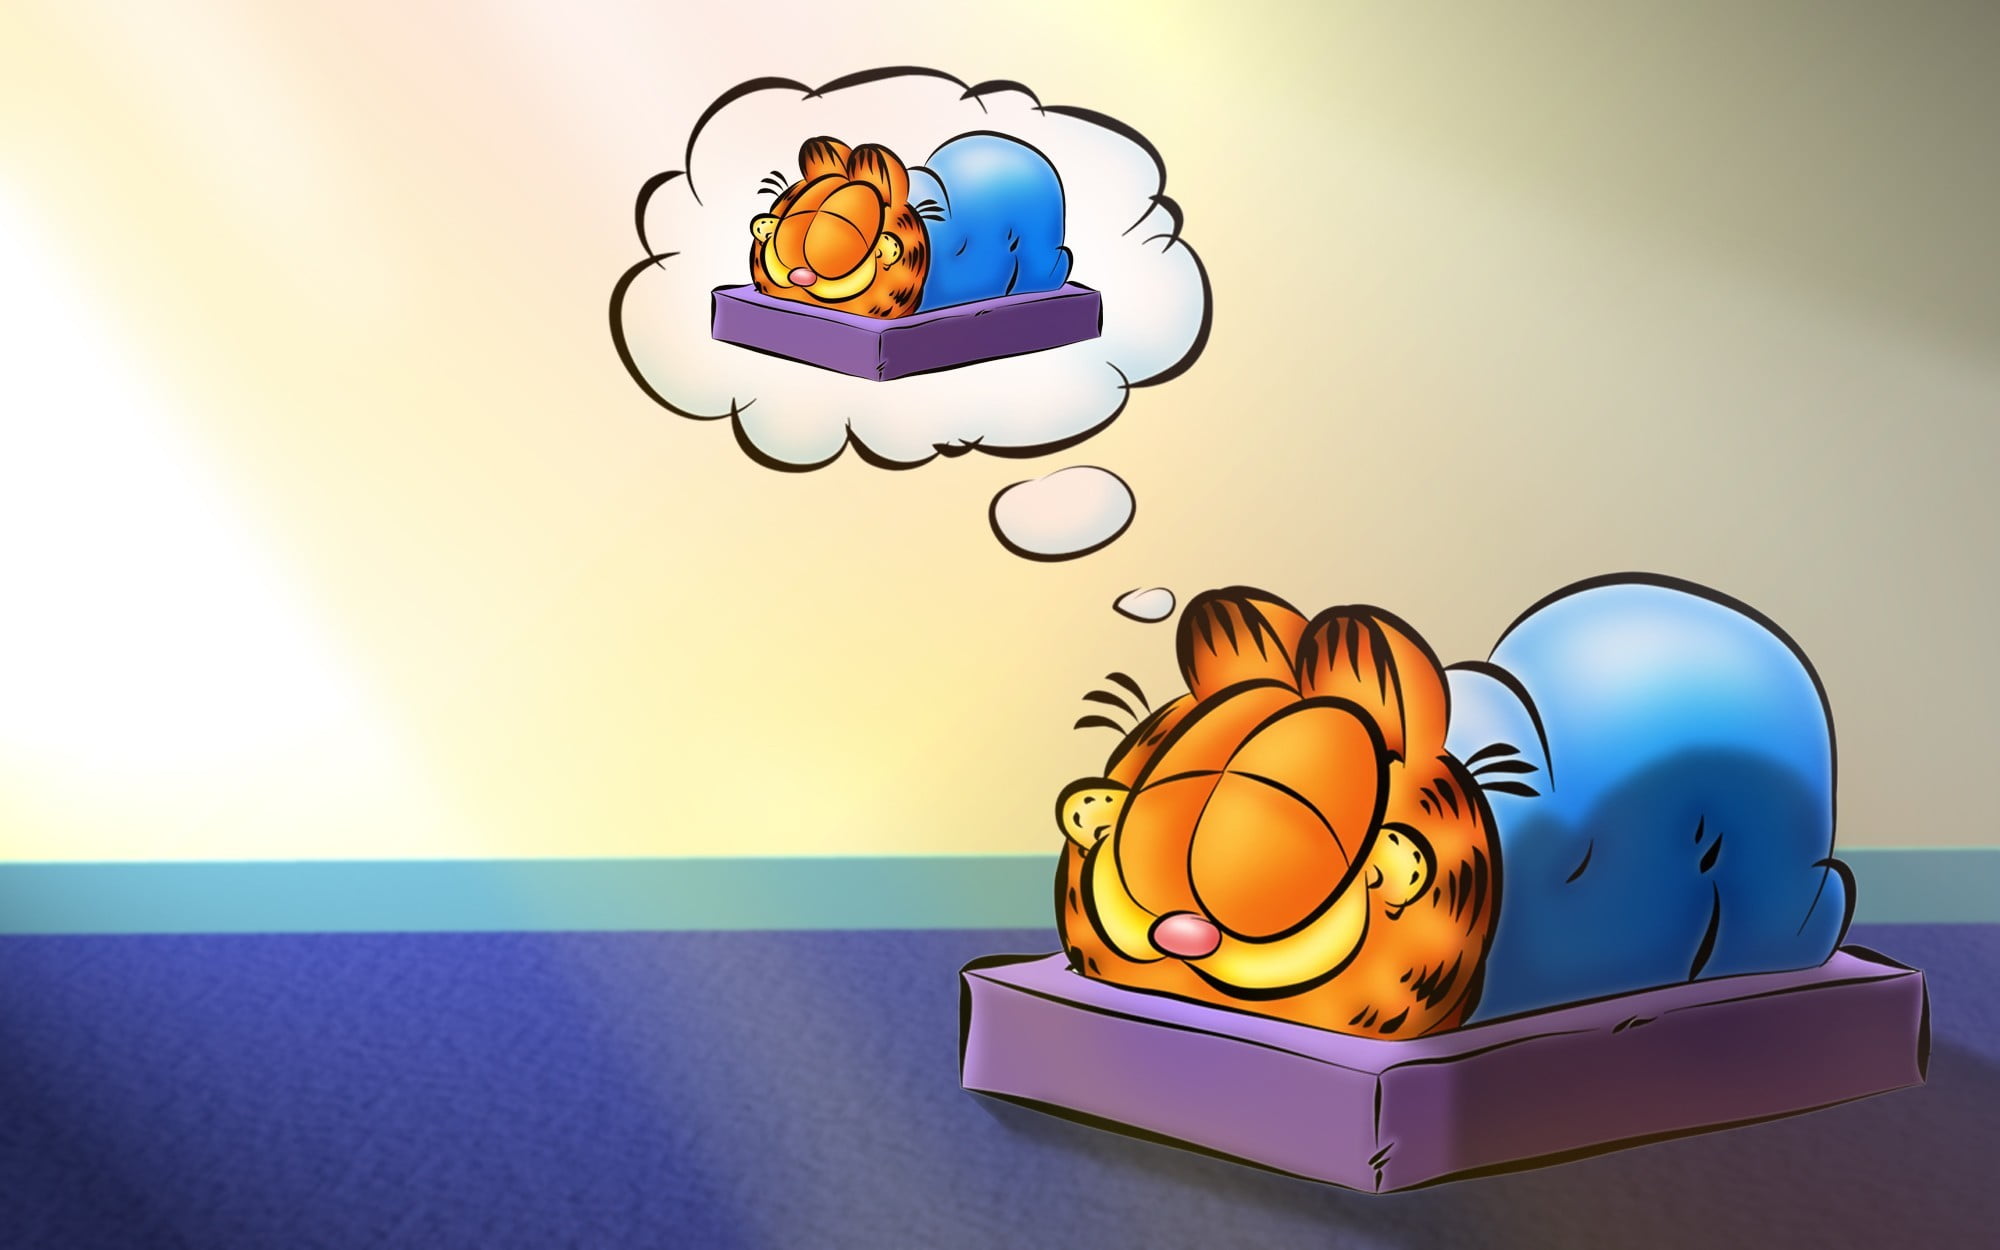 Garfield sleeping and dreaming digital wallpaper, cat, cartoon